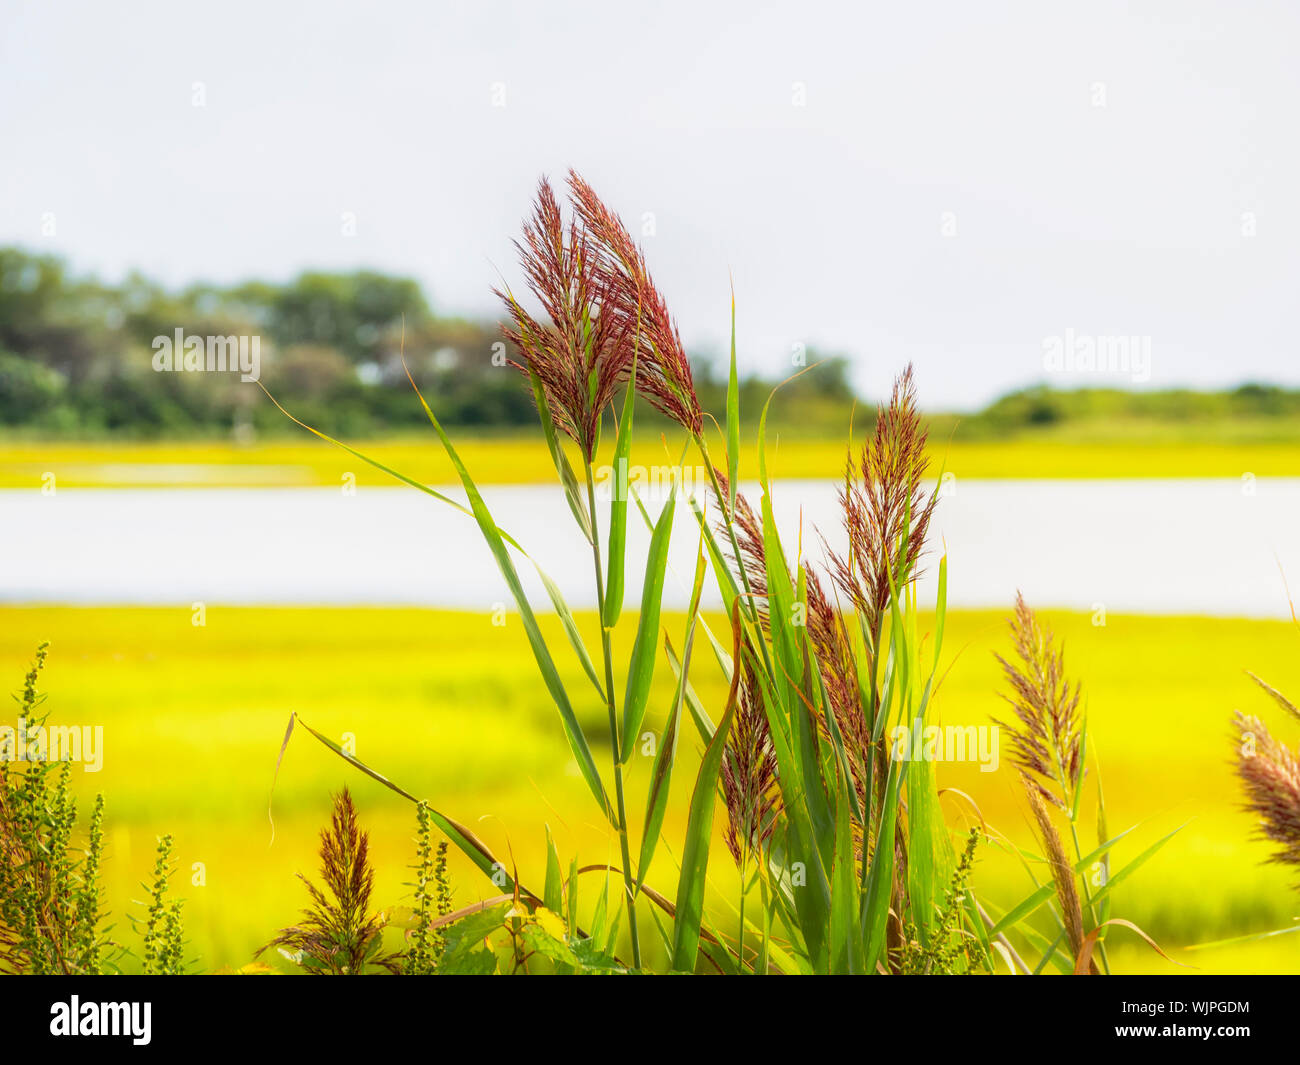 Common reed, a perennial grass, Phragmites australis (Cav.) Trin. ex Steud., Phragmites communis Trin., grows in a salt marsh golden hour Connecticut Stock Photo